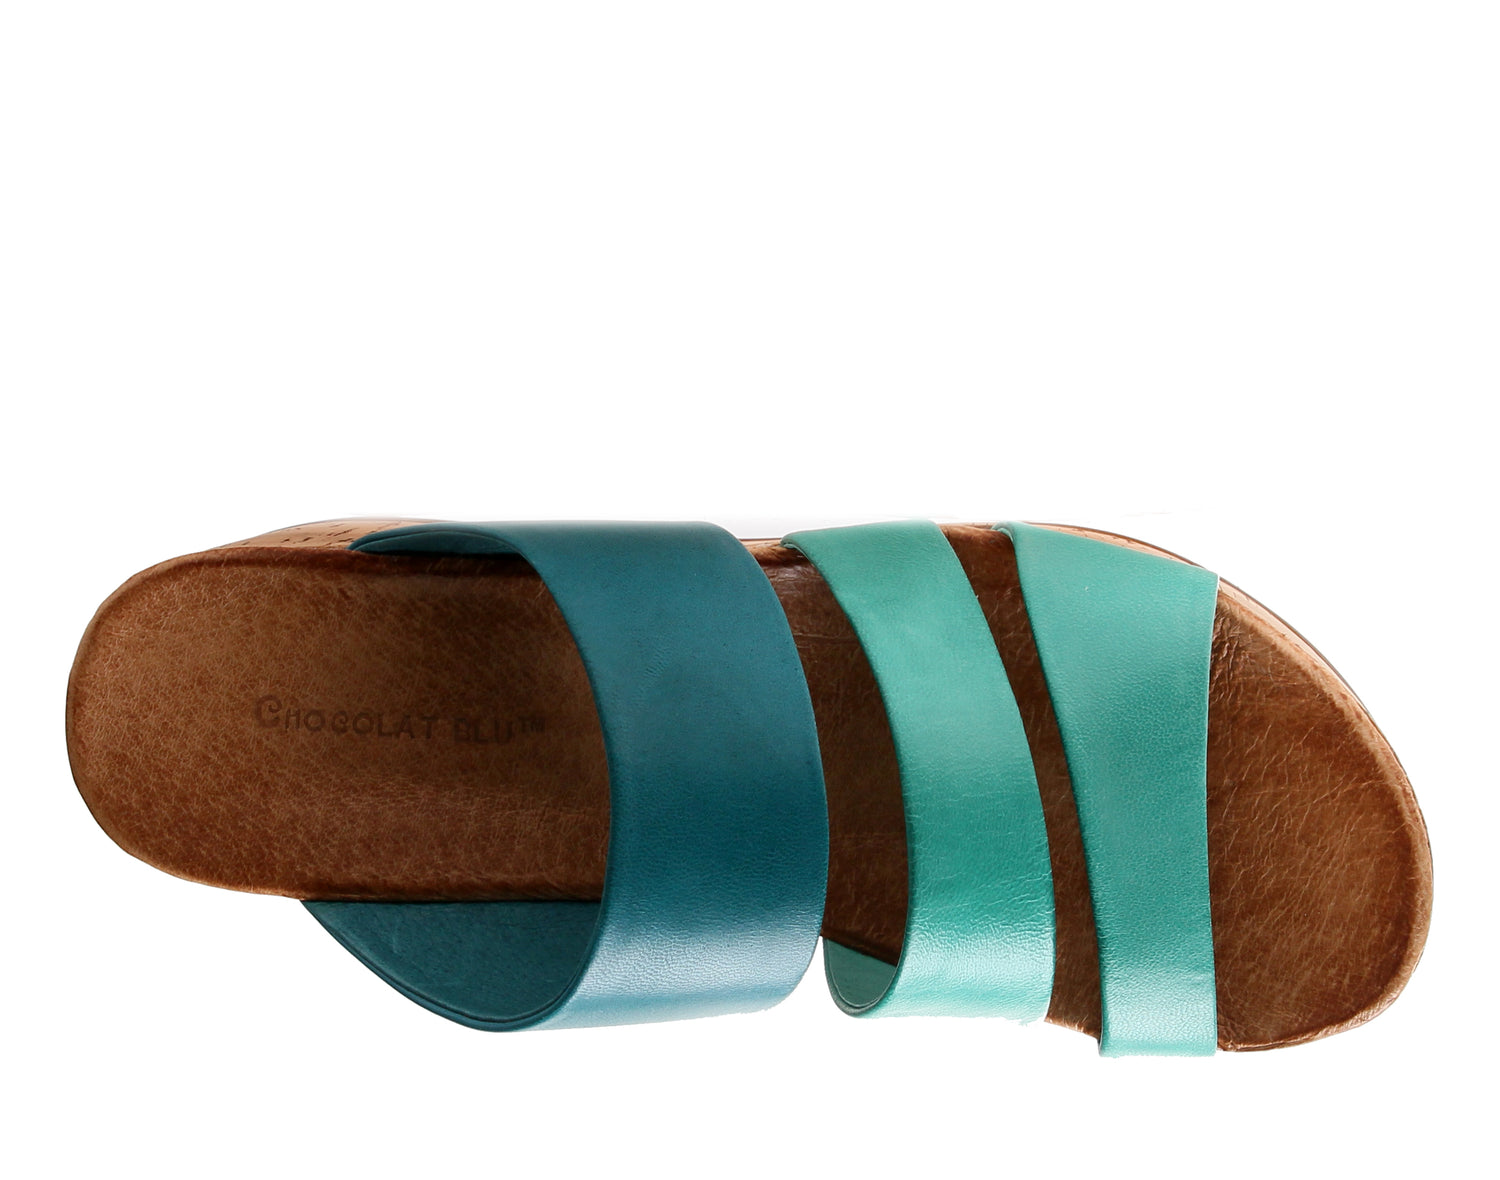 Chocolat Blu Morgan Wedge Women's Sandals